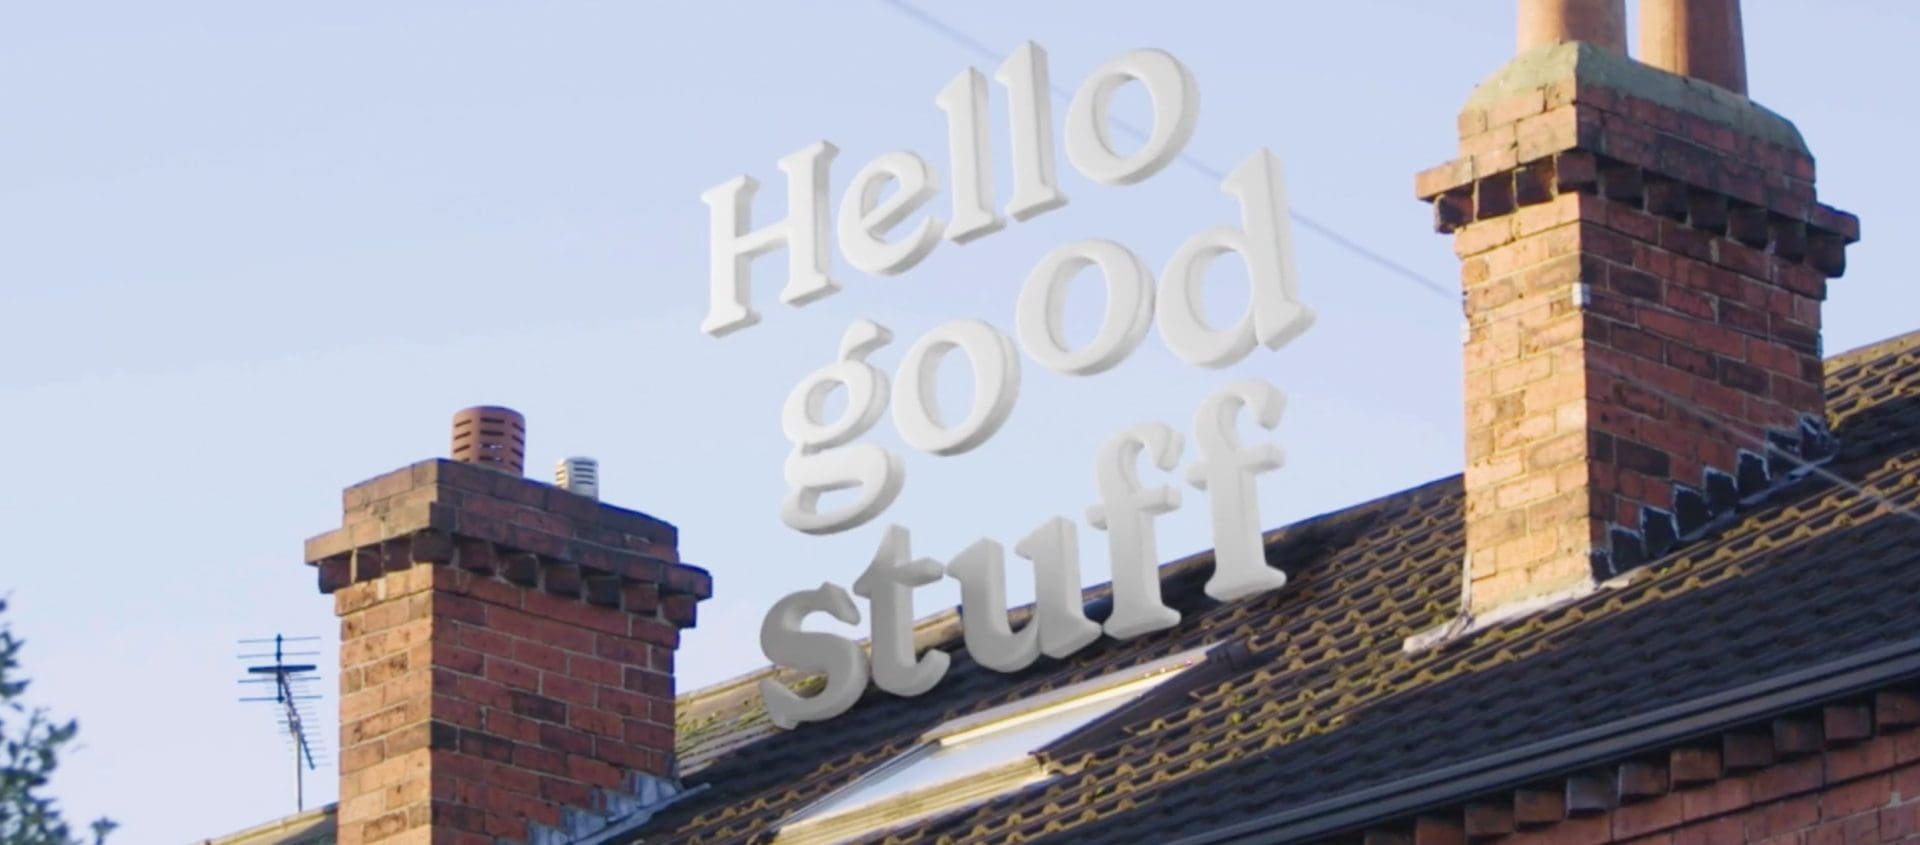 KCOM "Hello Good Stuff" Video screenshot - logo over house